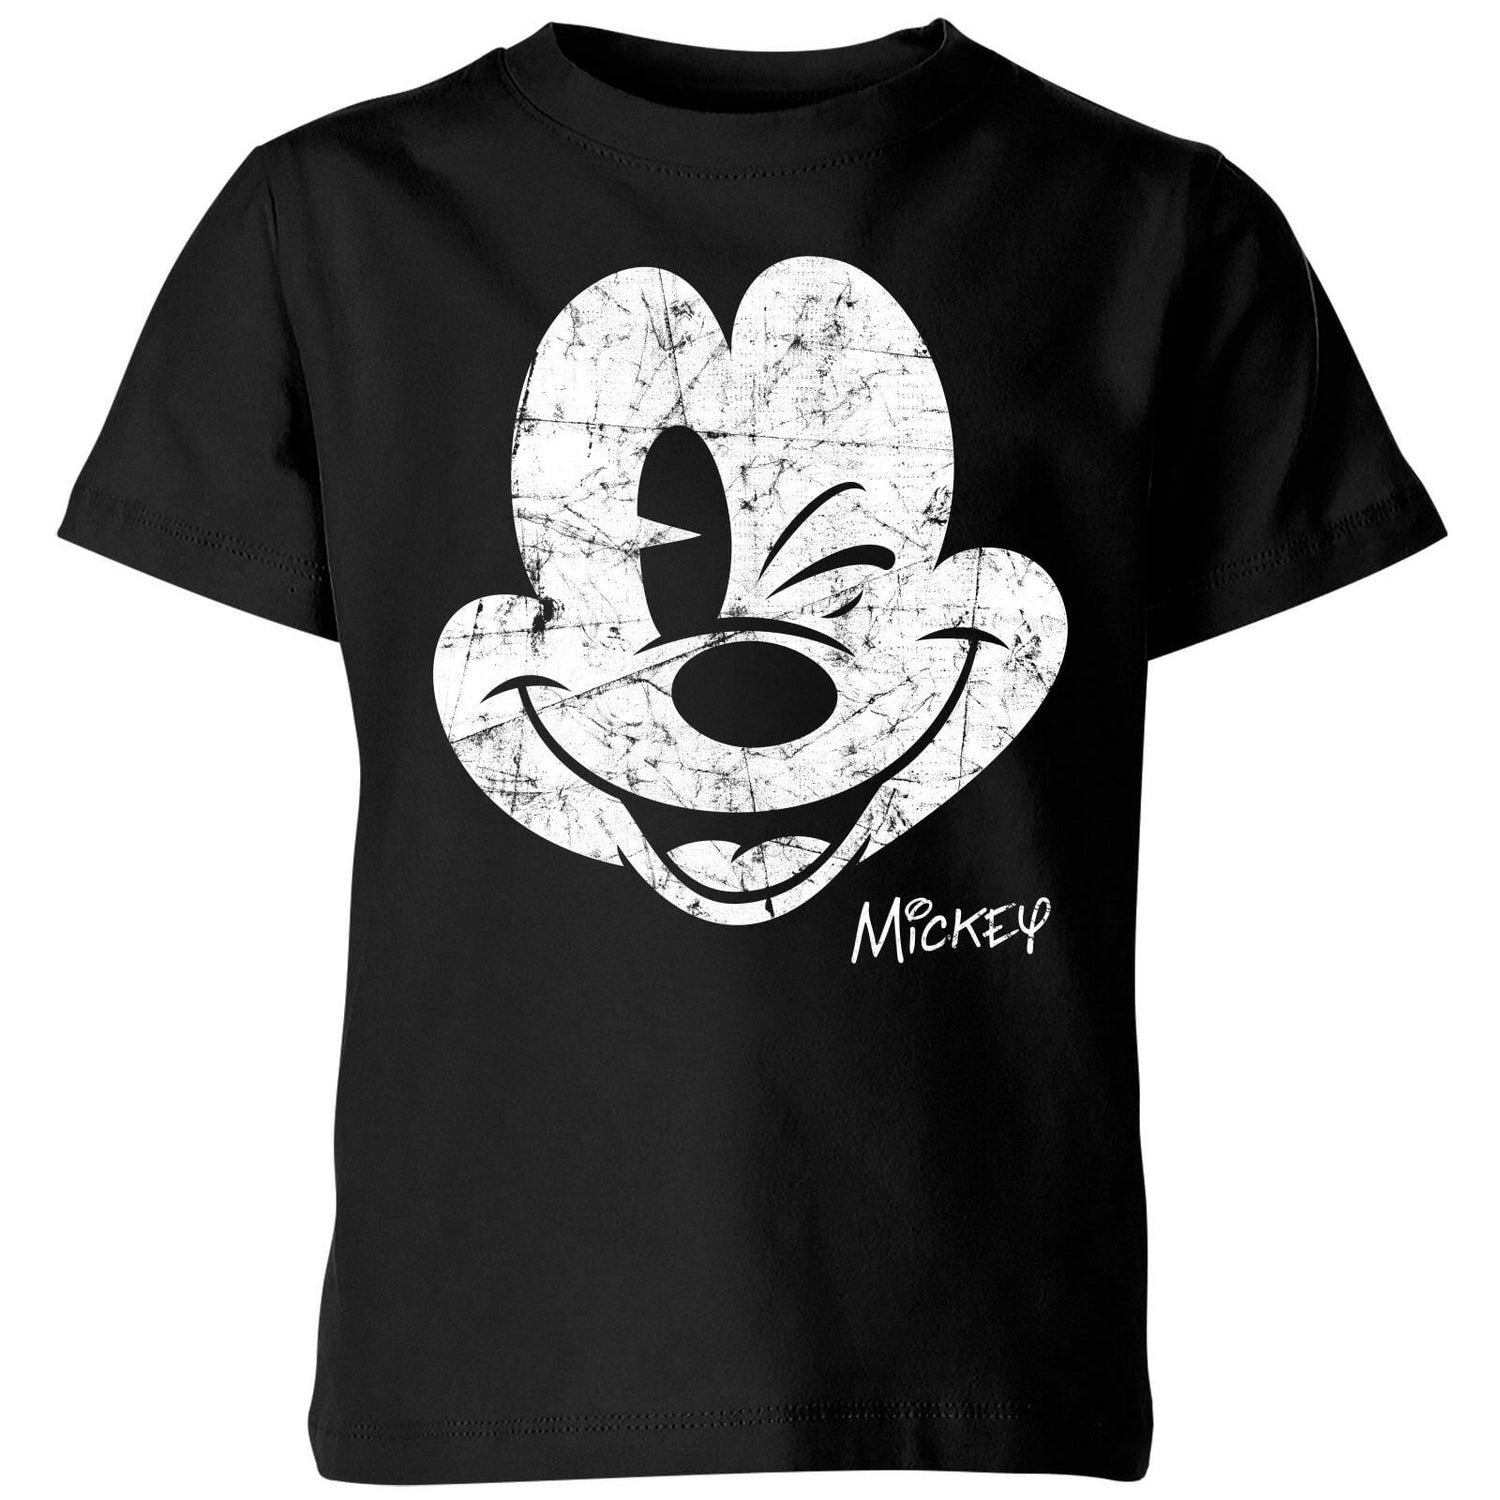 Disney Mickey Mouse Worn Face Kids' T-Shirt - Black